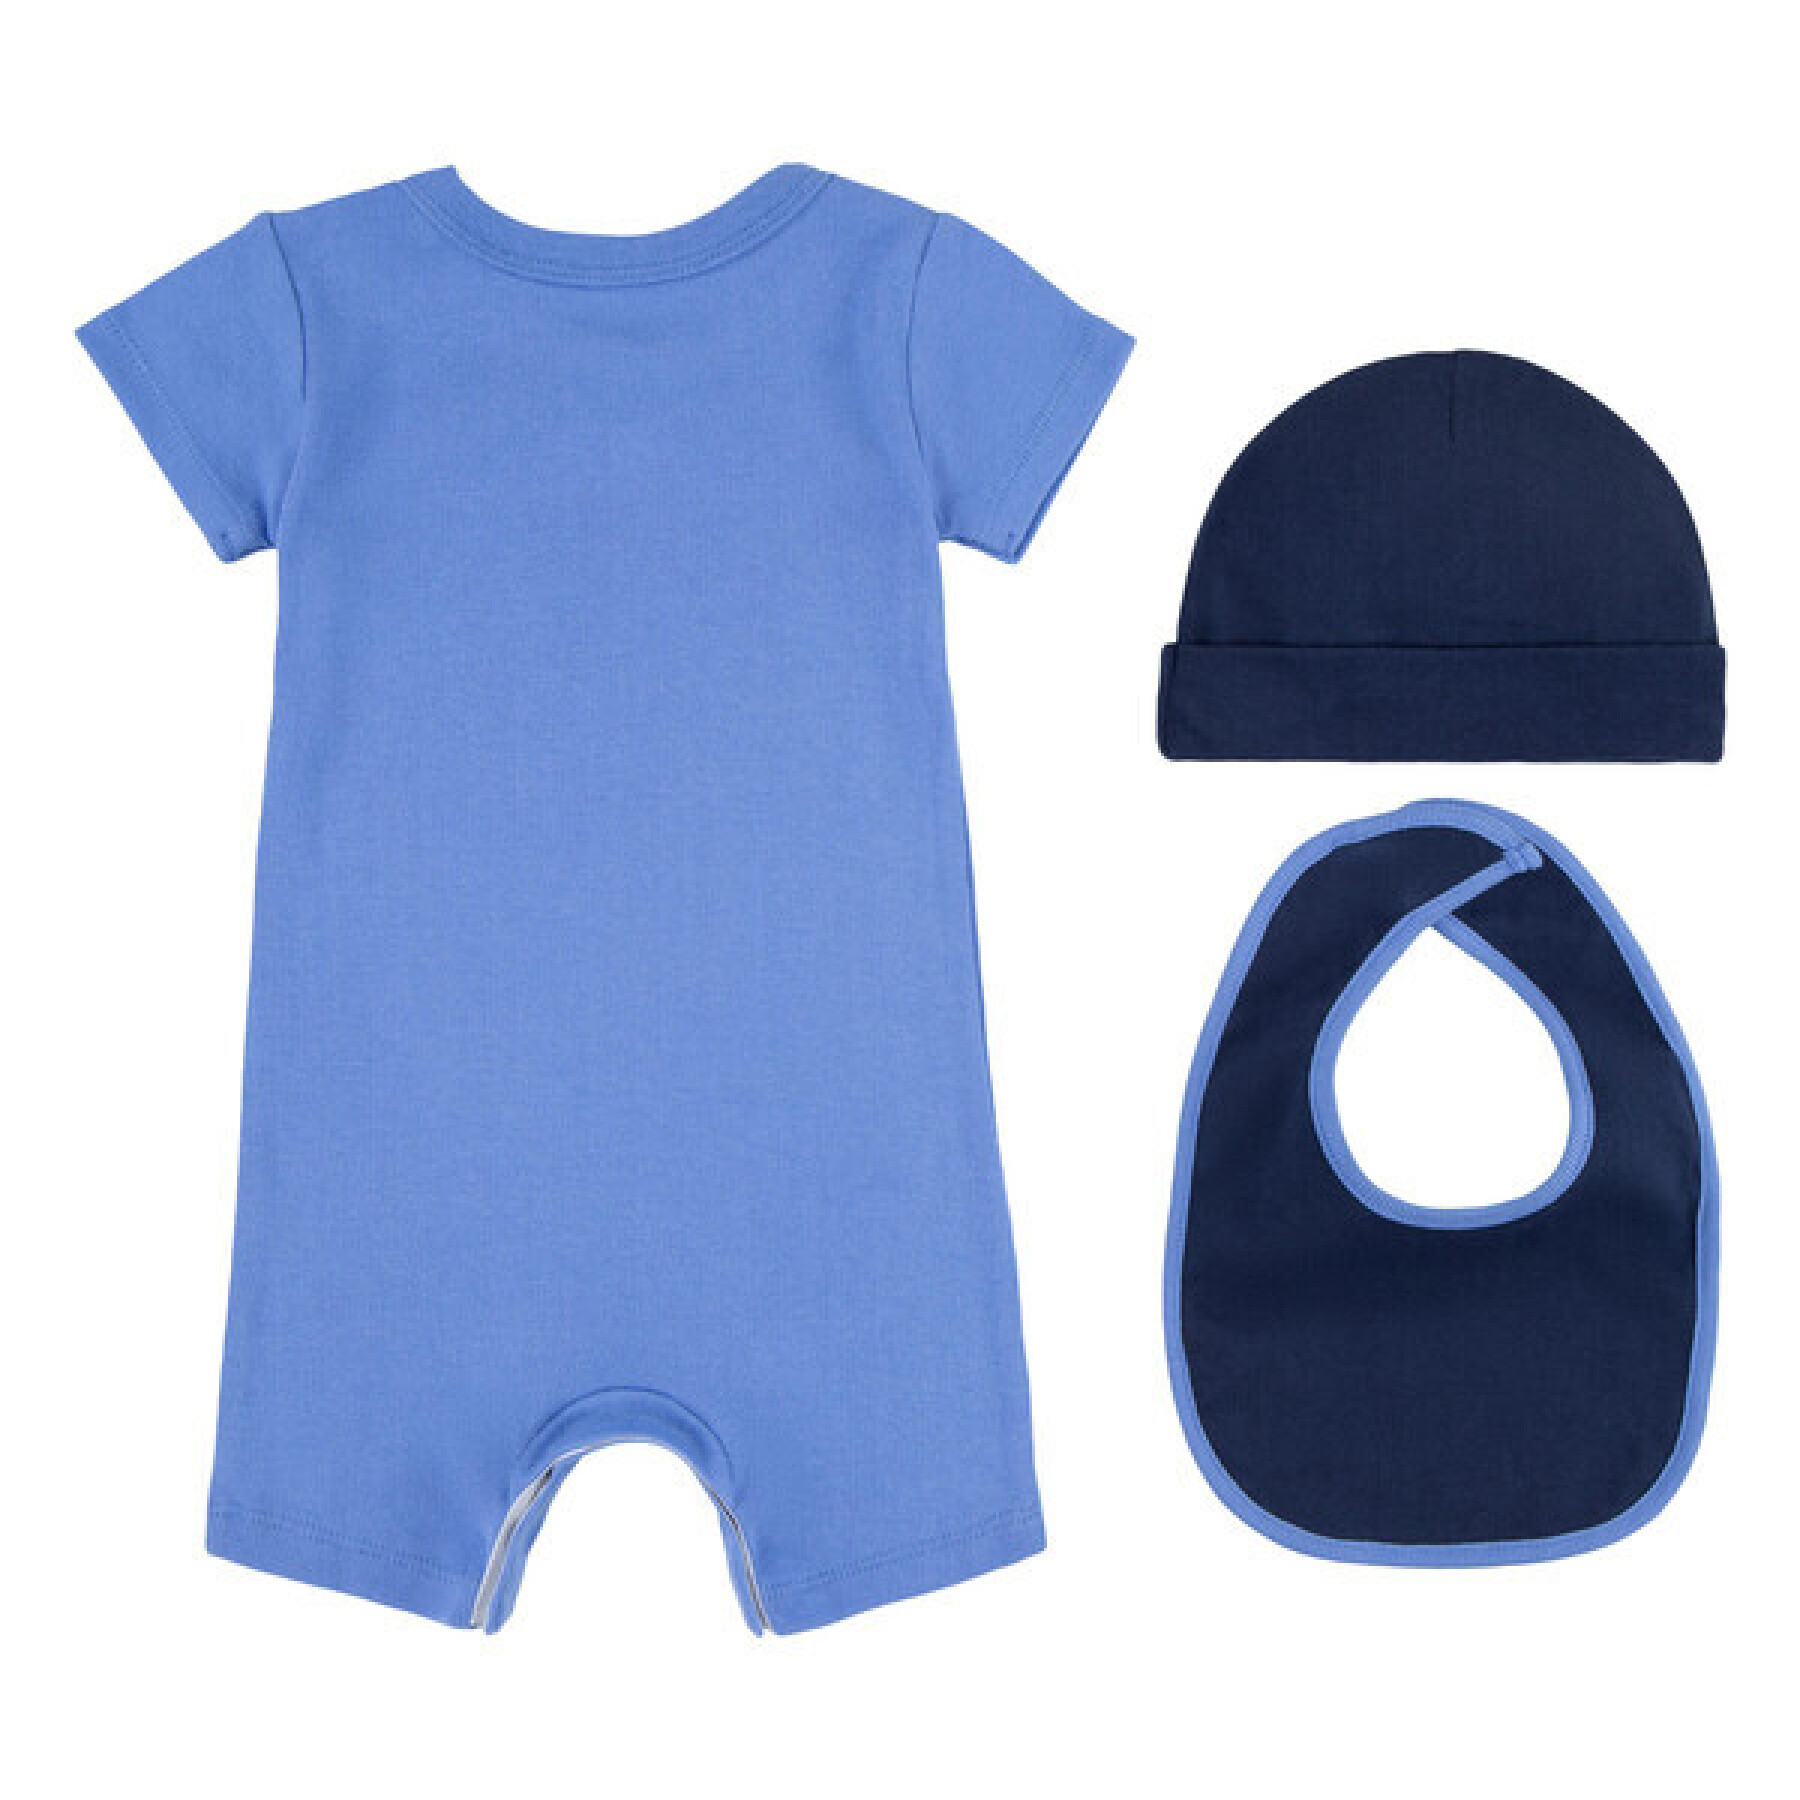 Baby bodysuit Nike Romper